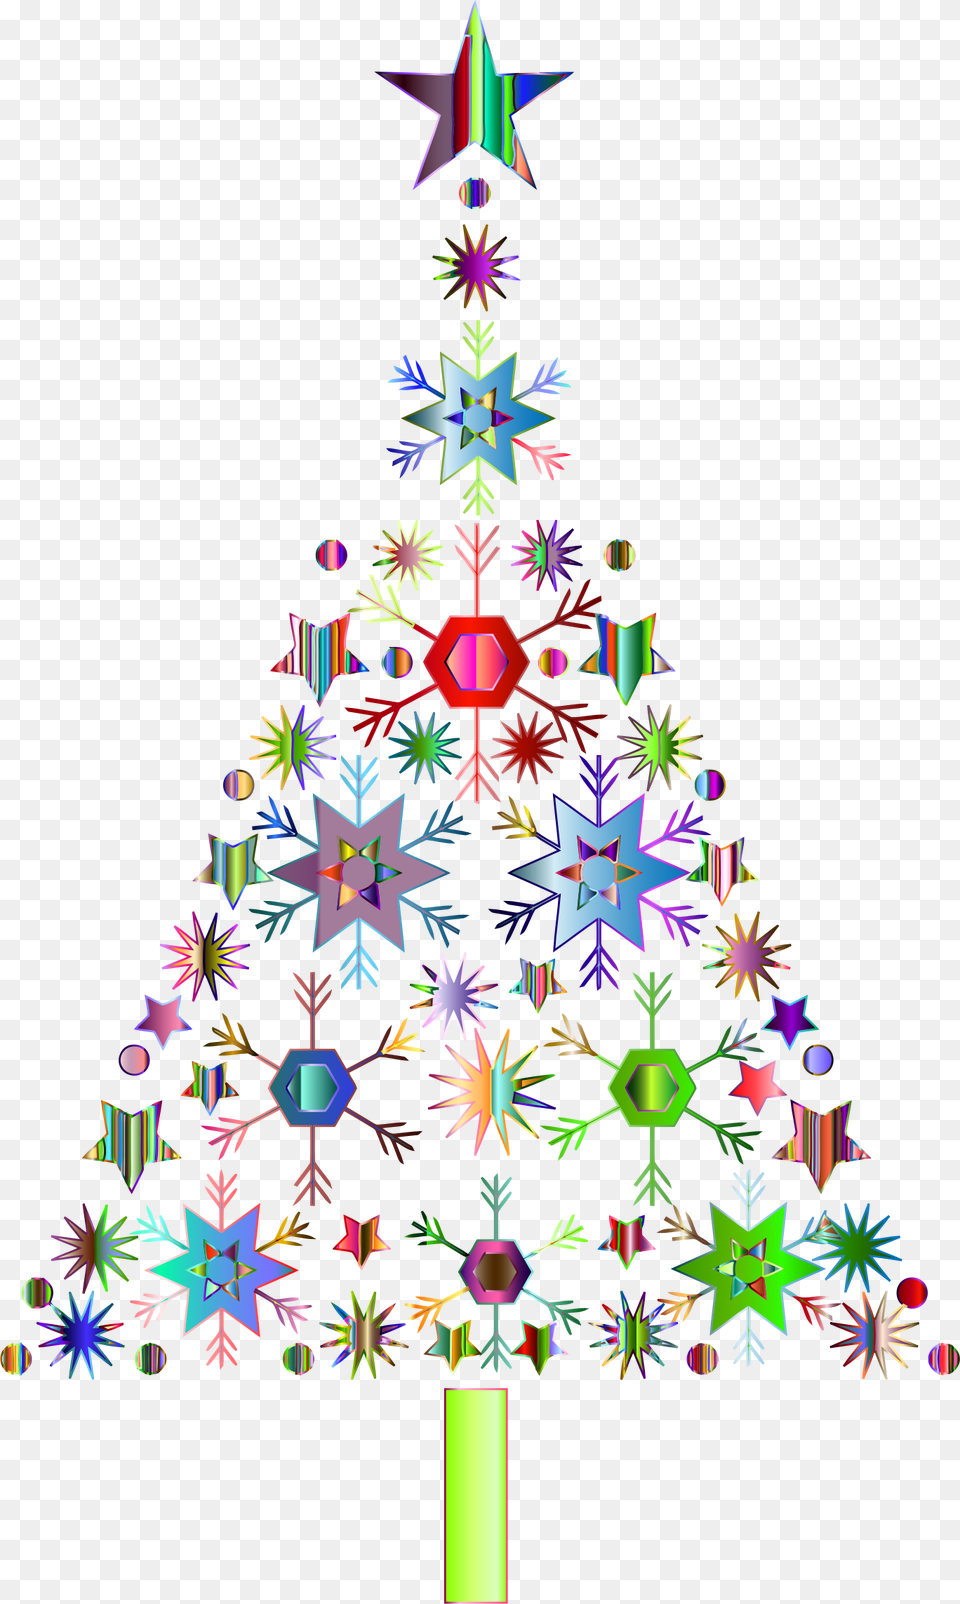 Christmas Tree Snowflake Christmas Decoration Clip Transparent Background Transparent Christmas Tree, Christmas Decorations, Festival, Christmas Tree Png